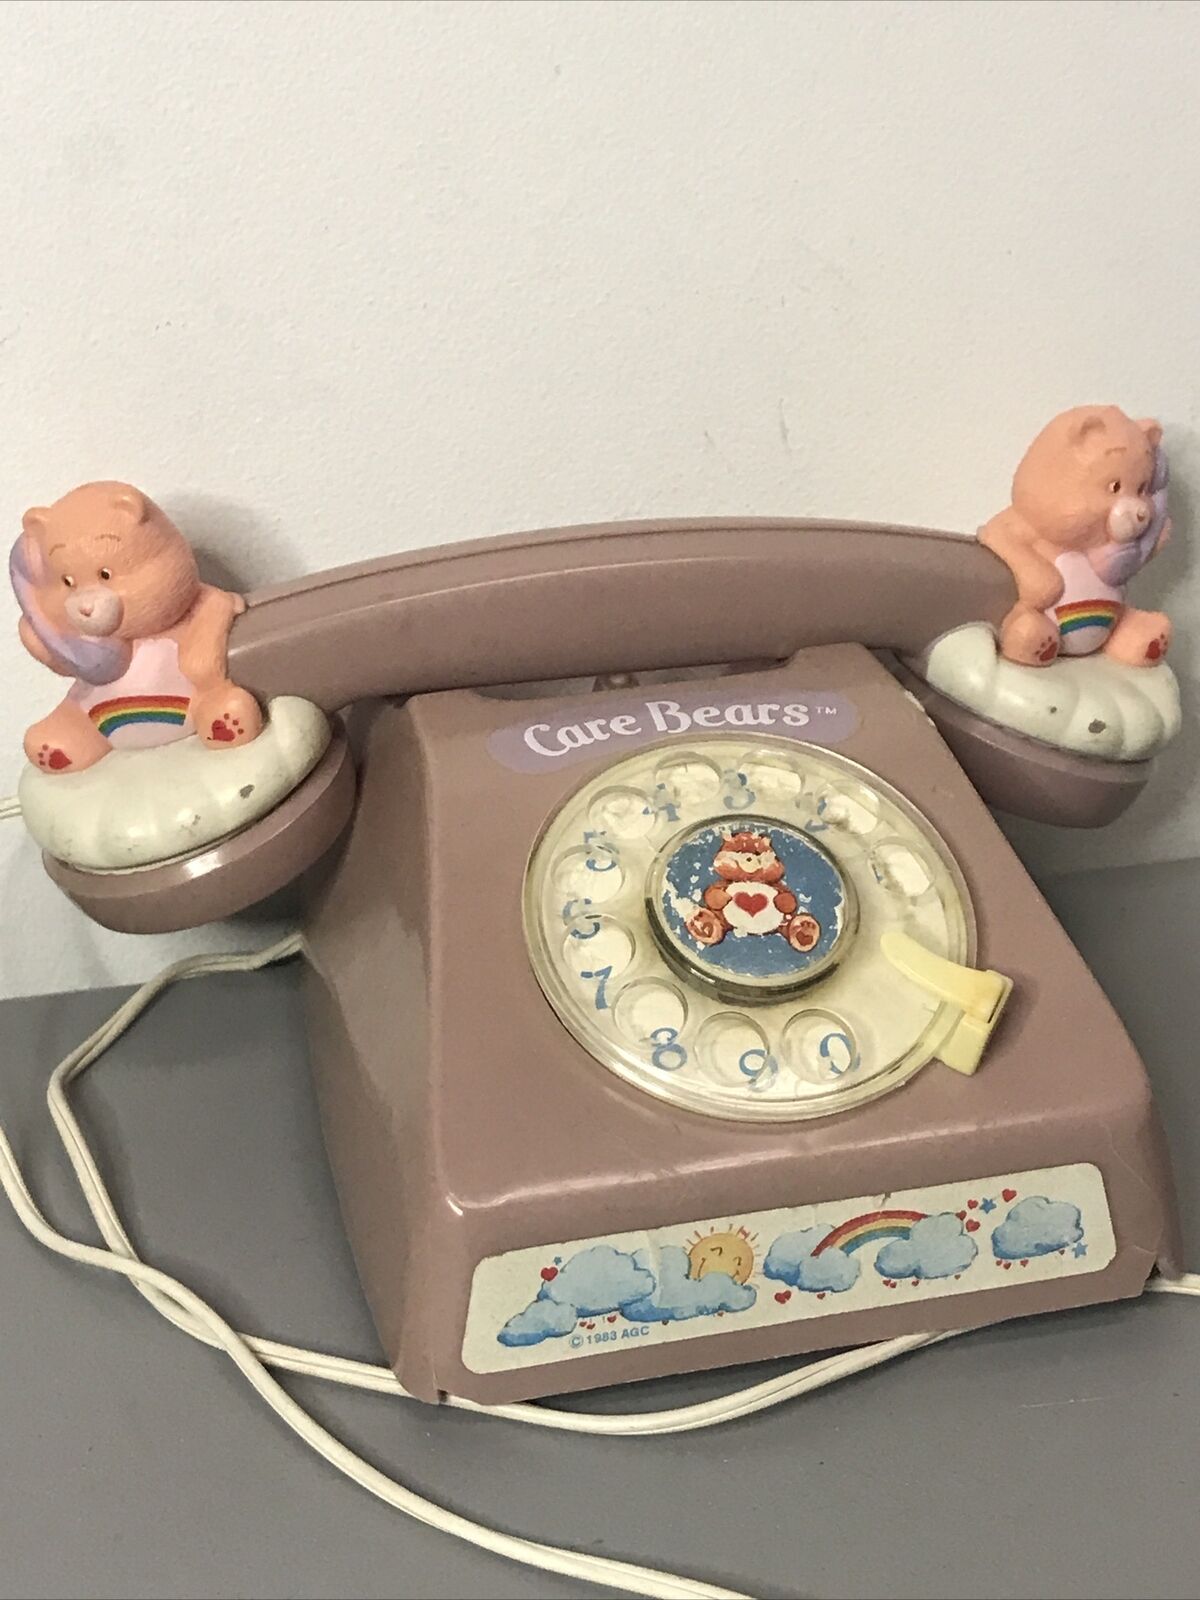 Vintage Care Bears Pink Rotary Phone 1983 American Greetings SOLD AS IS